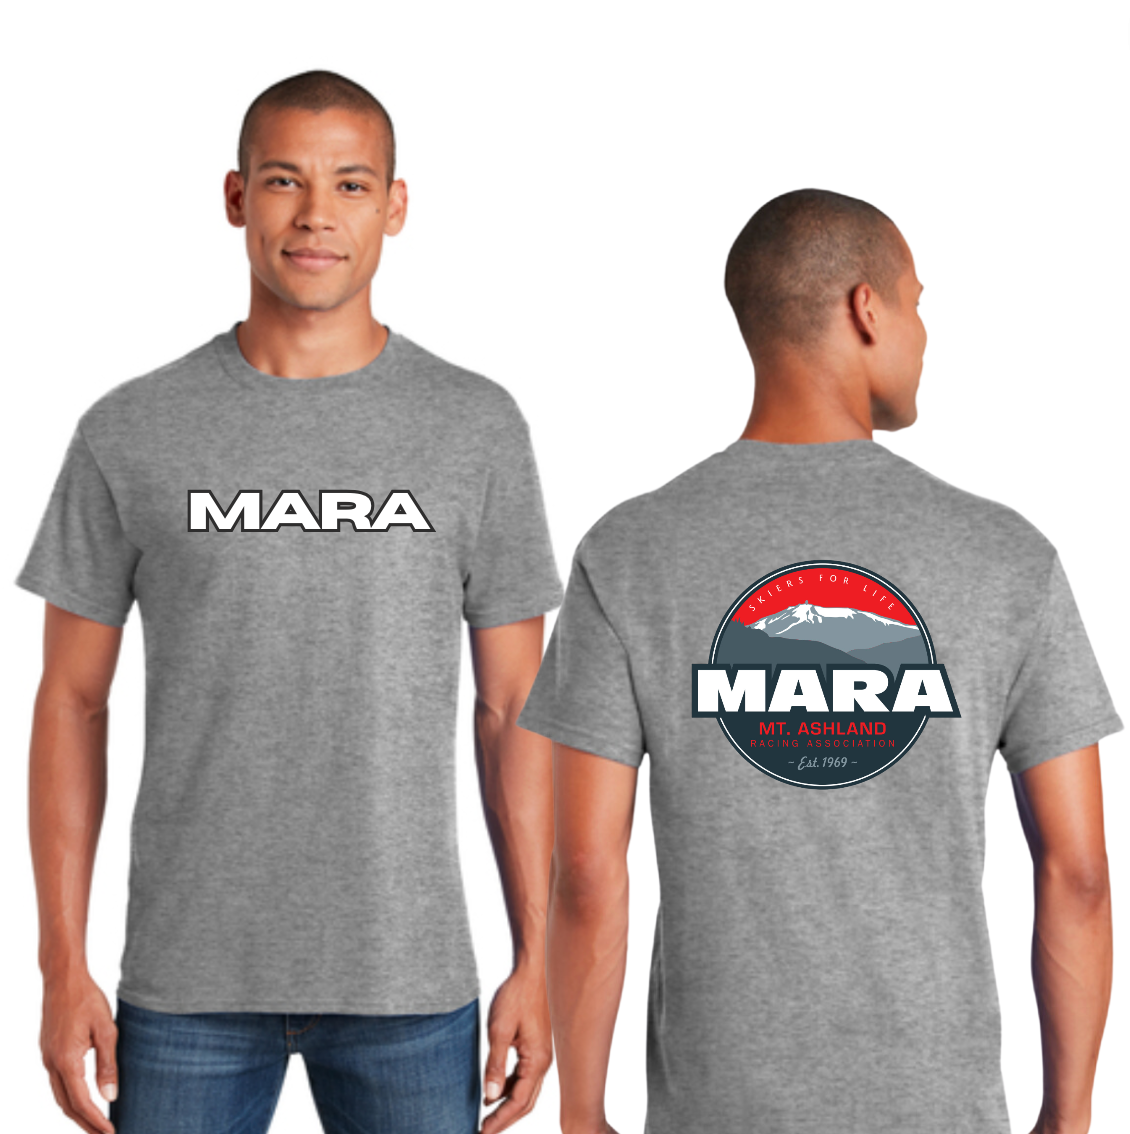 Adult Short Sleeve MARA T-shirt